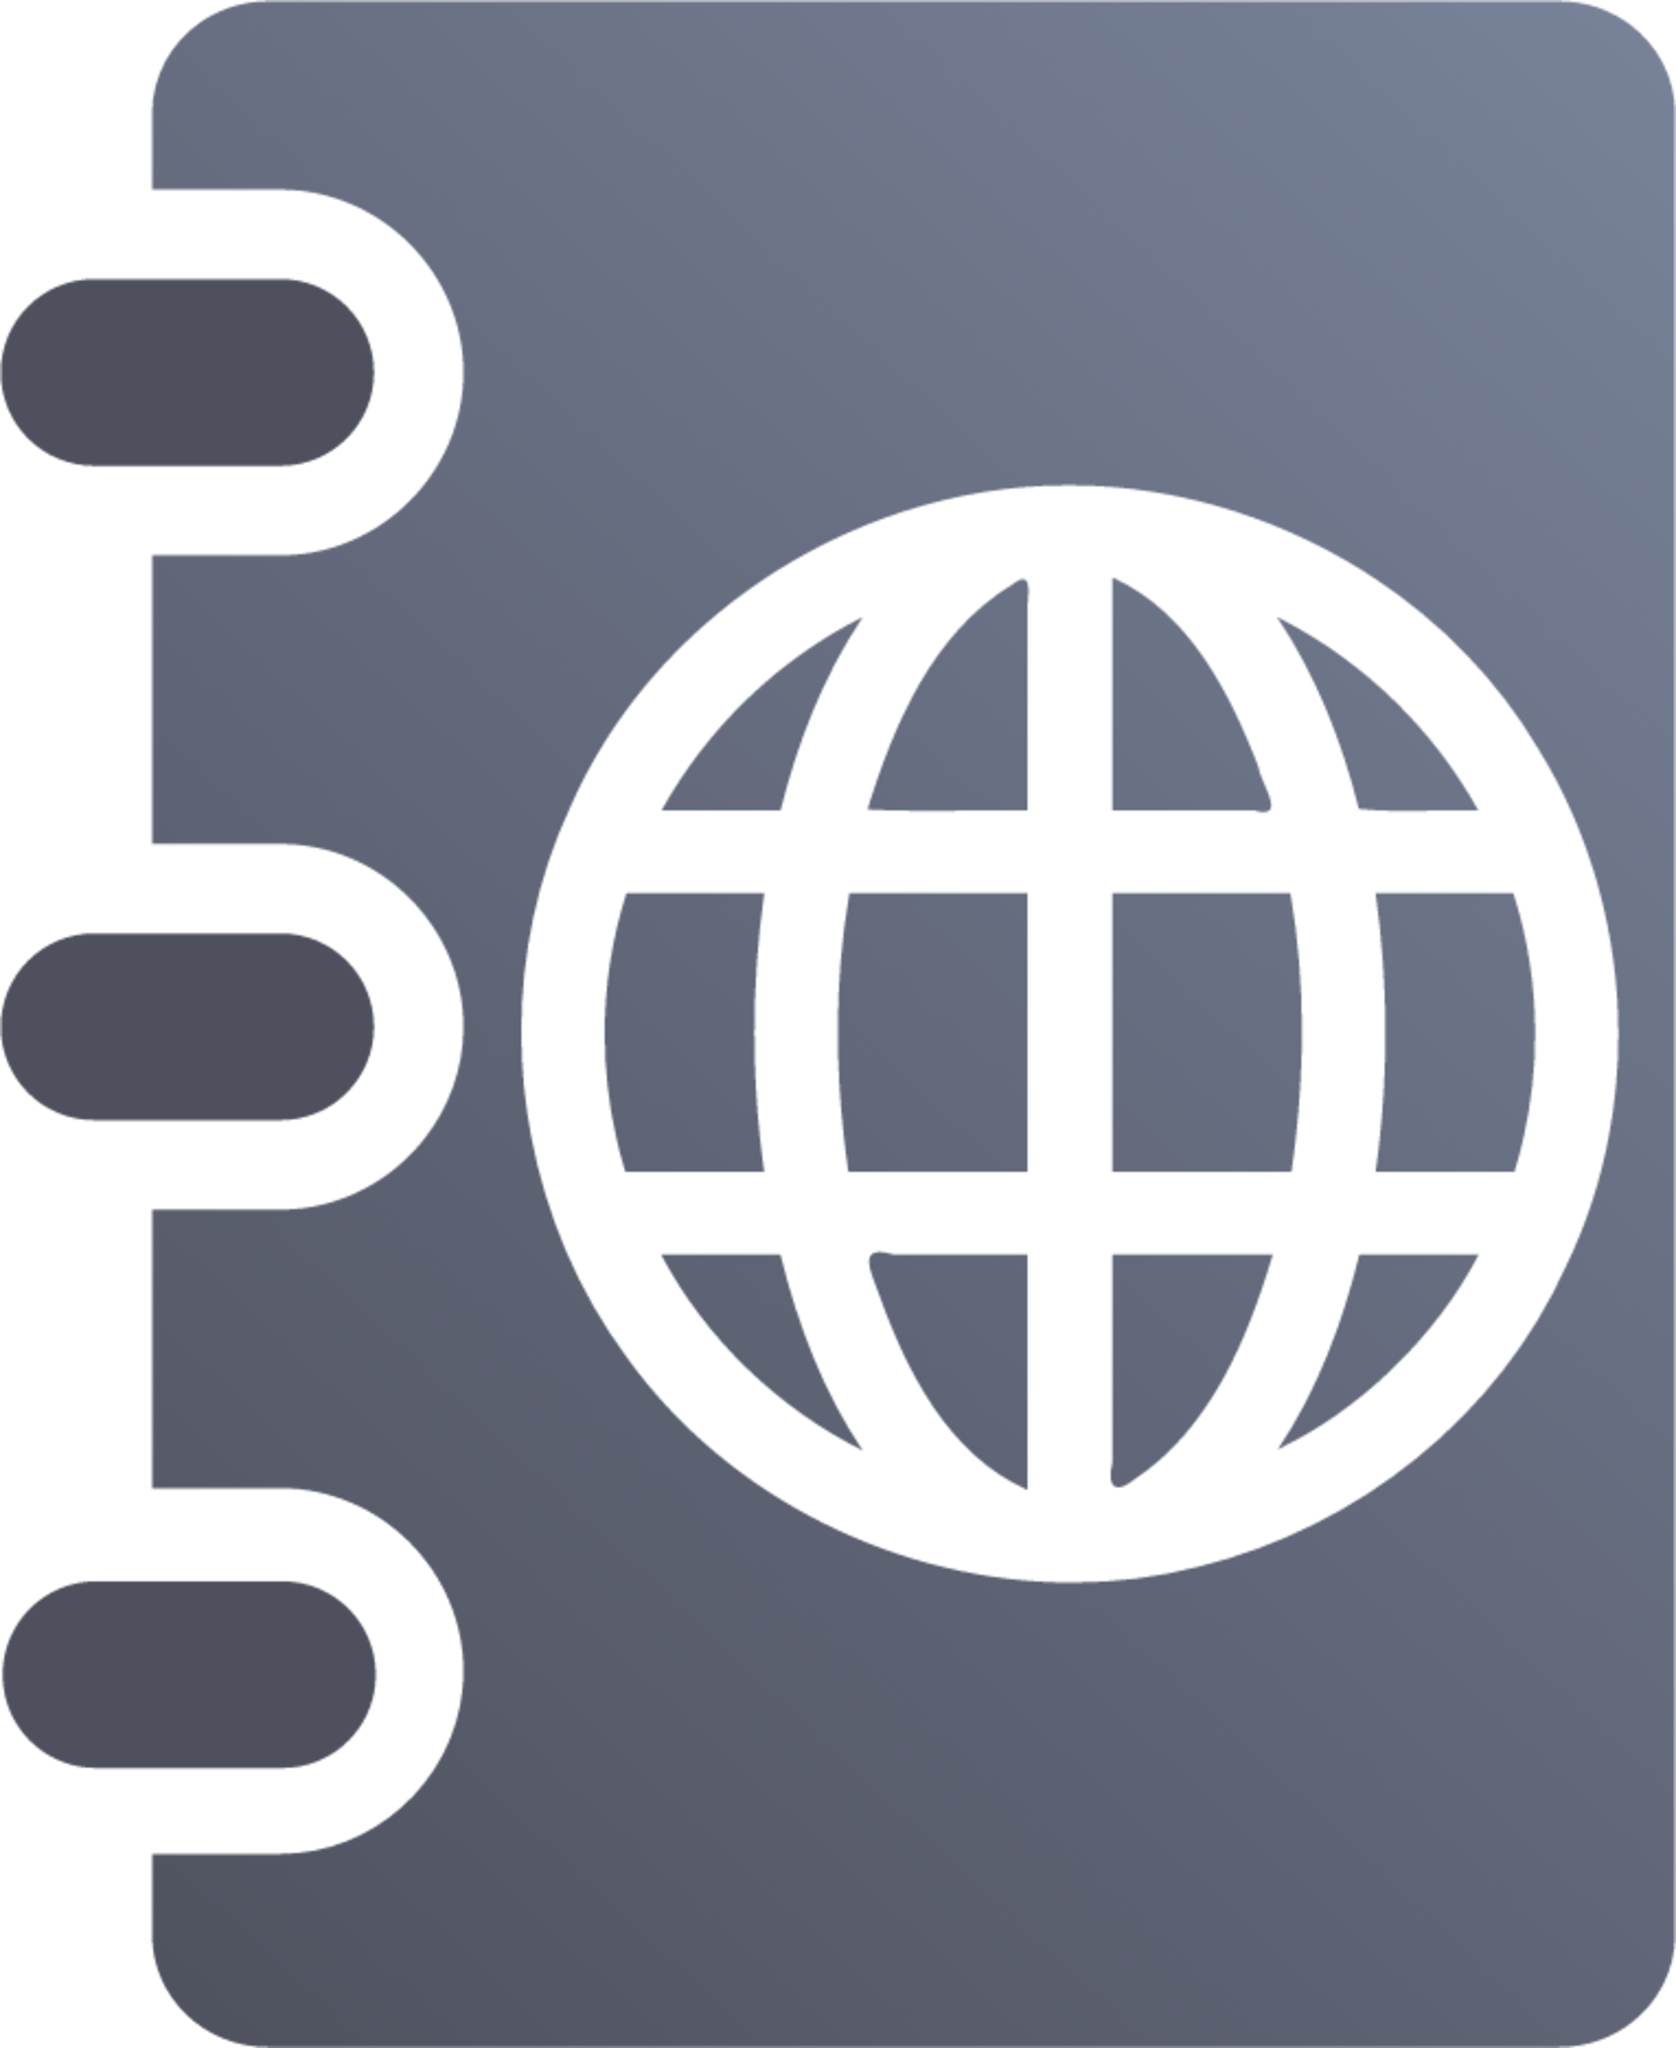 address book global icon